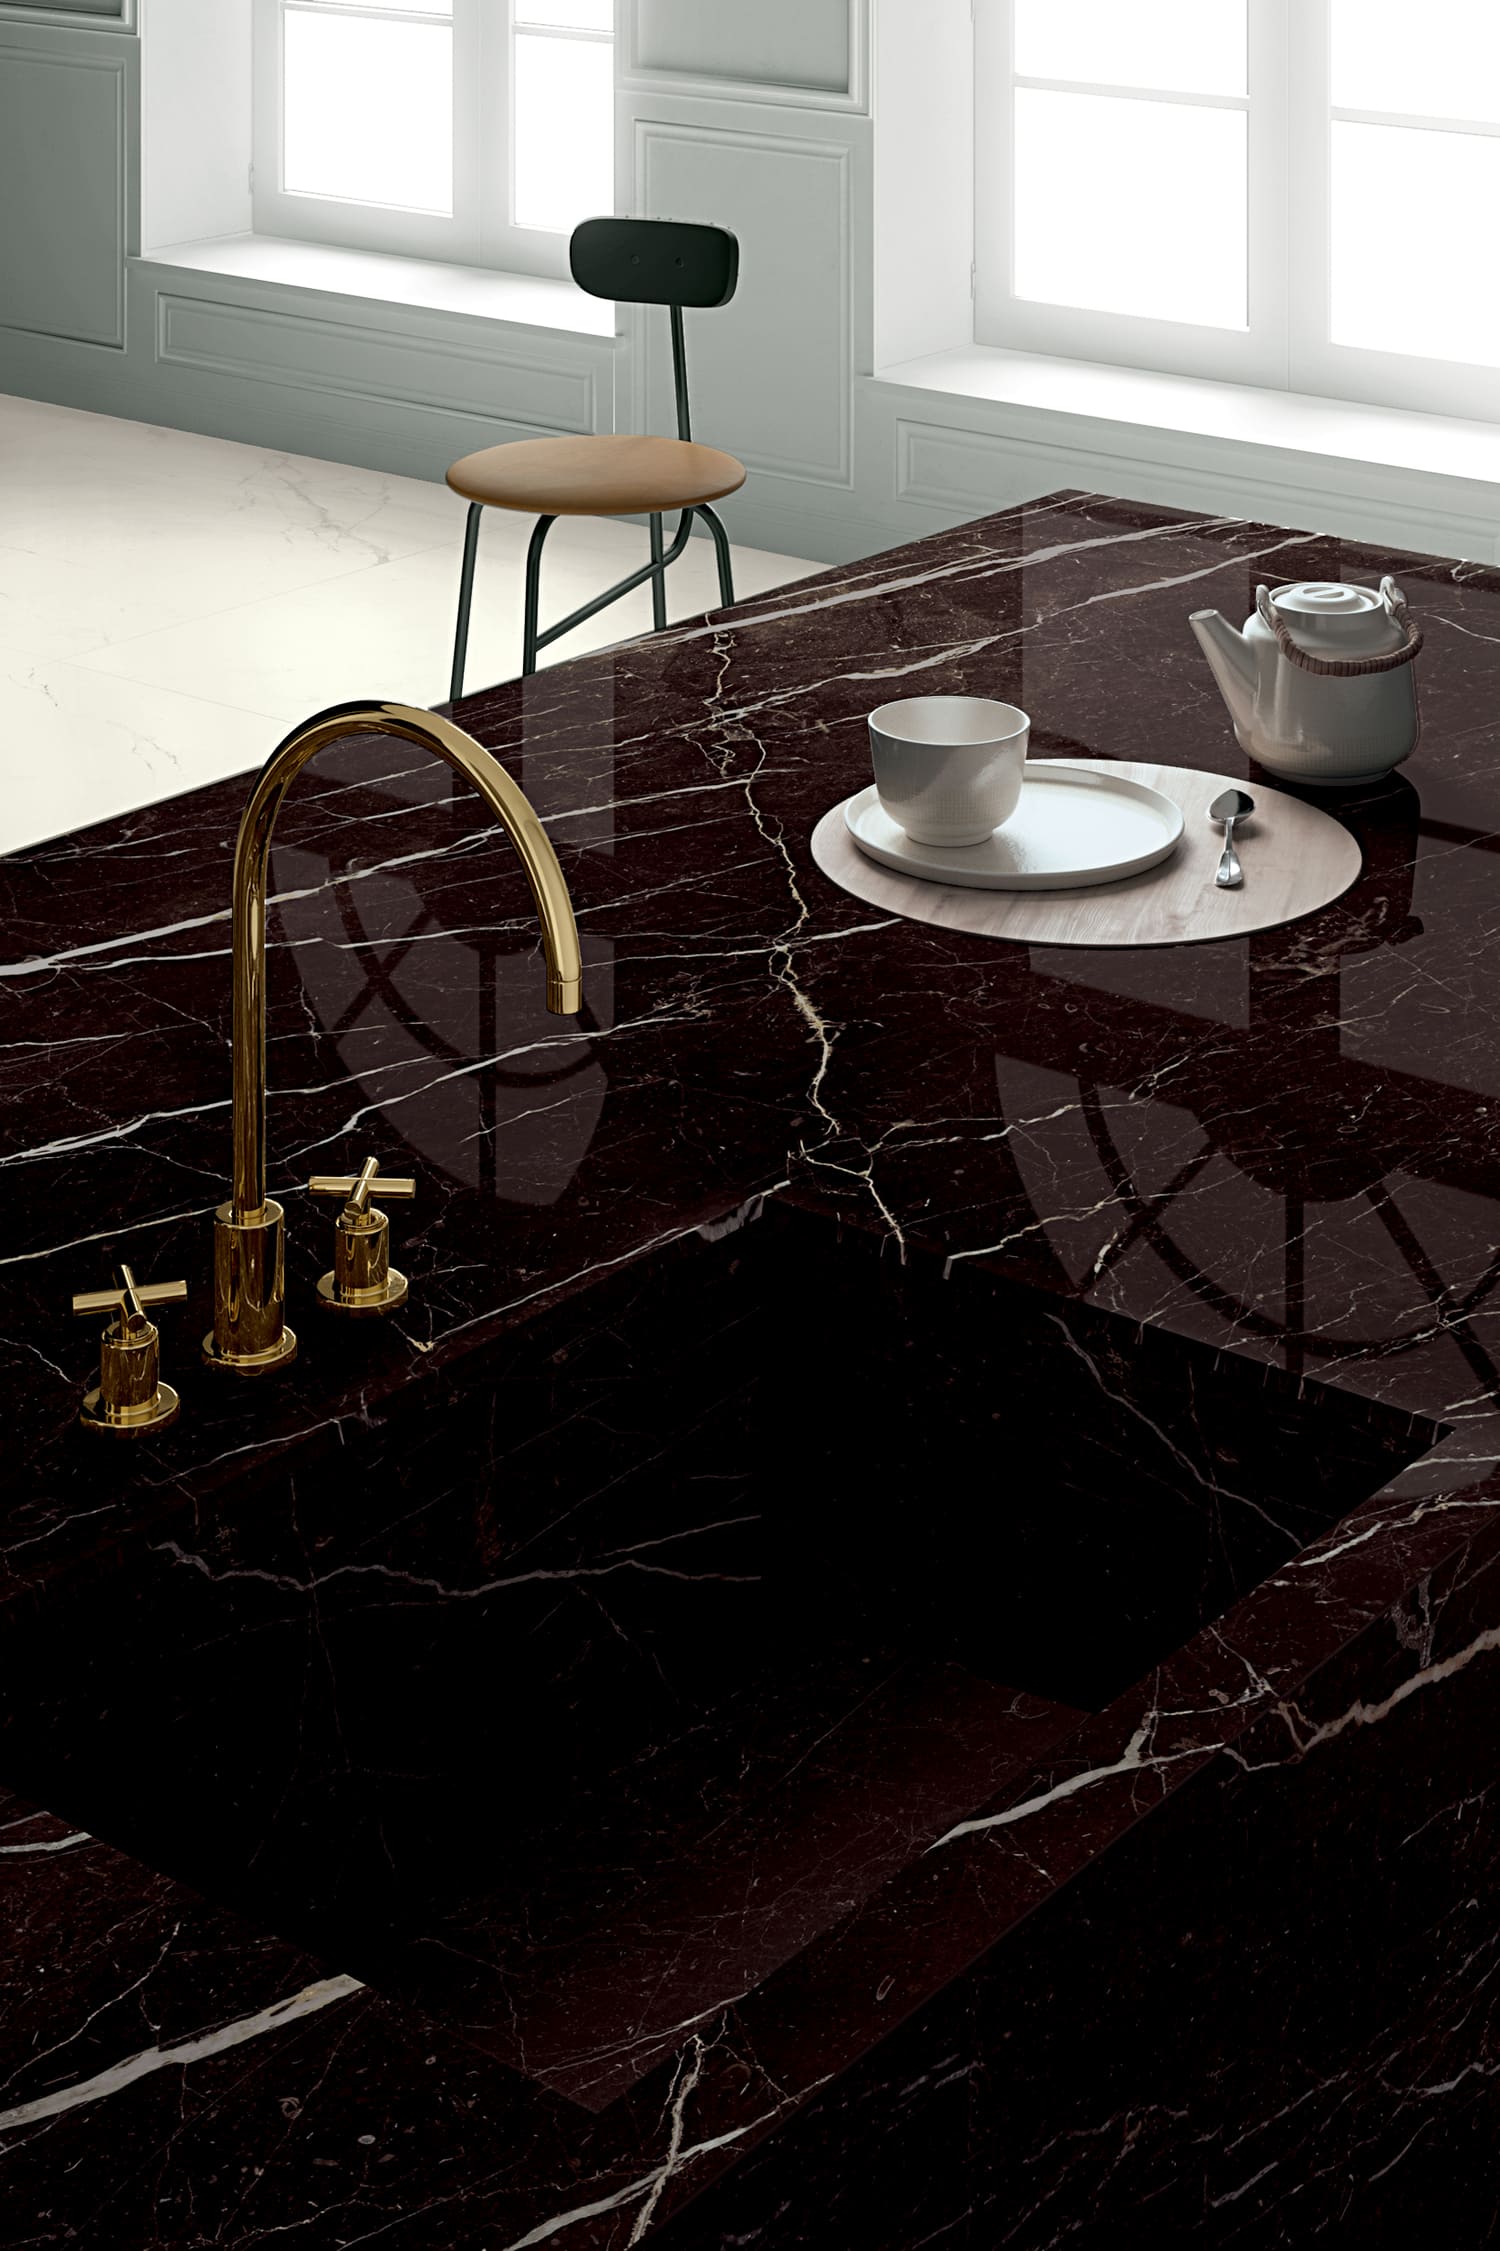 pavimenti-rivestimenti-effetto-marmo-cotto-deste-8590_z_CDE-vanity-biancoluce-touch-vanity-darkbrown-glossy-Kitchen-001-fratelli-nero